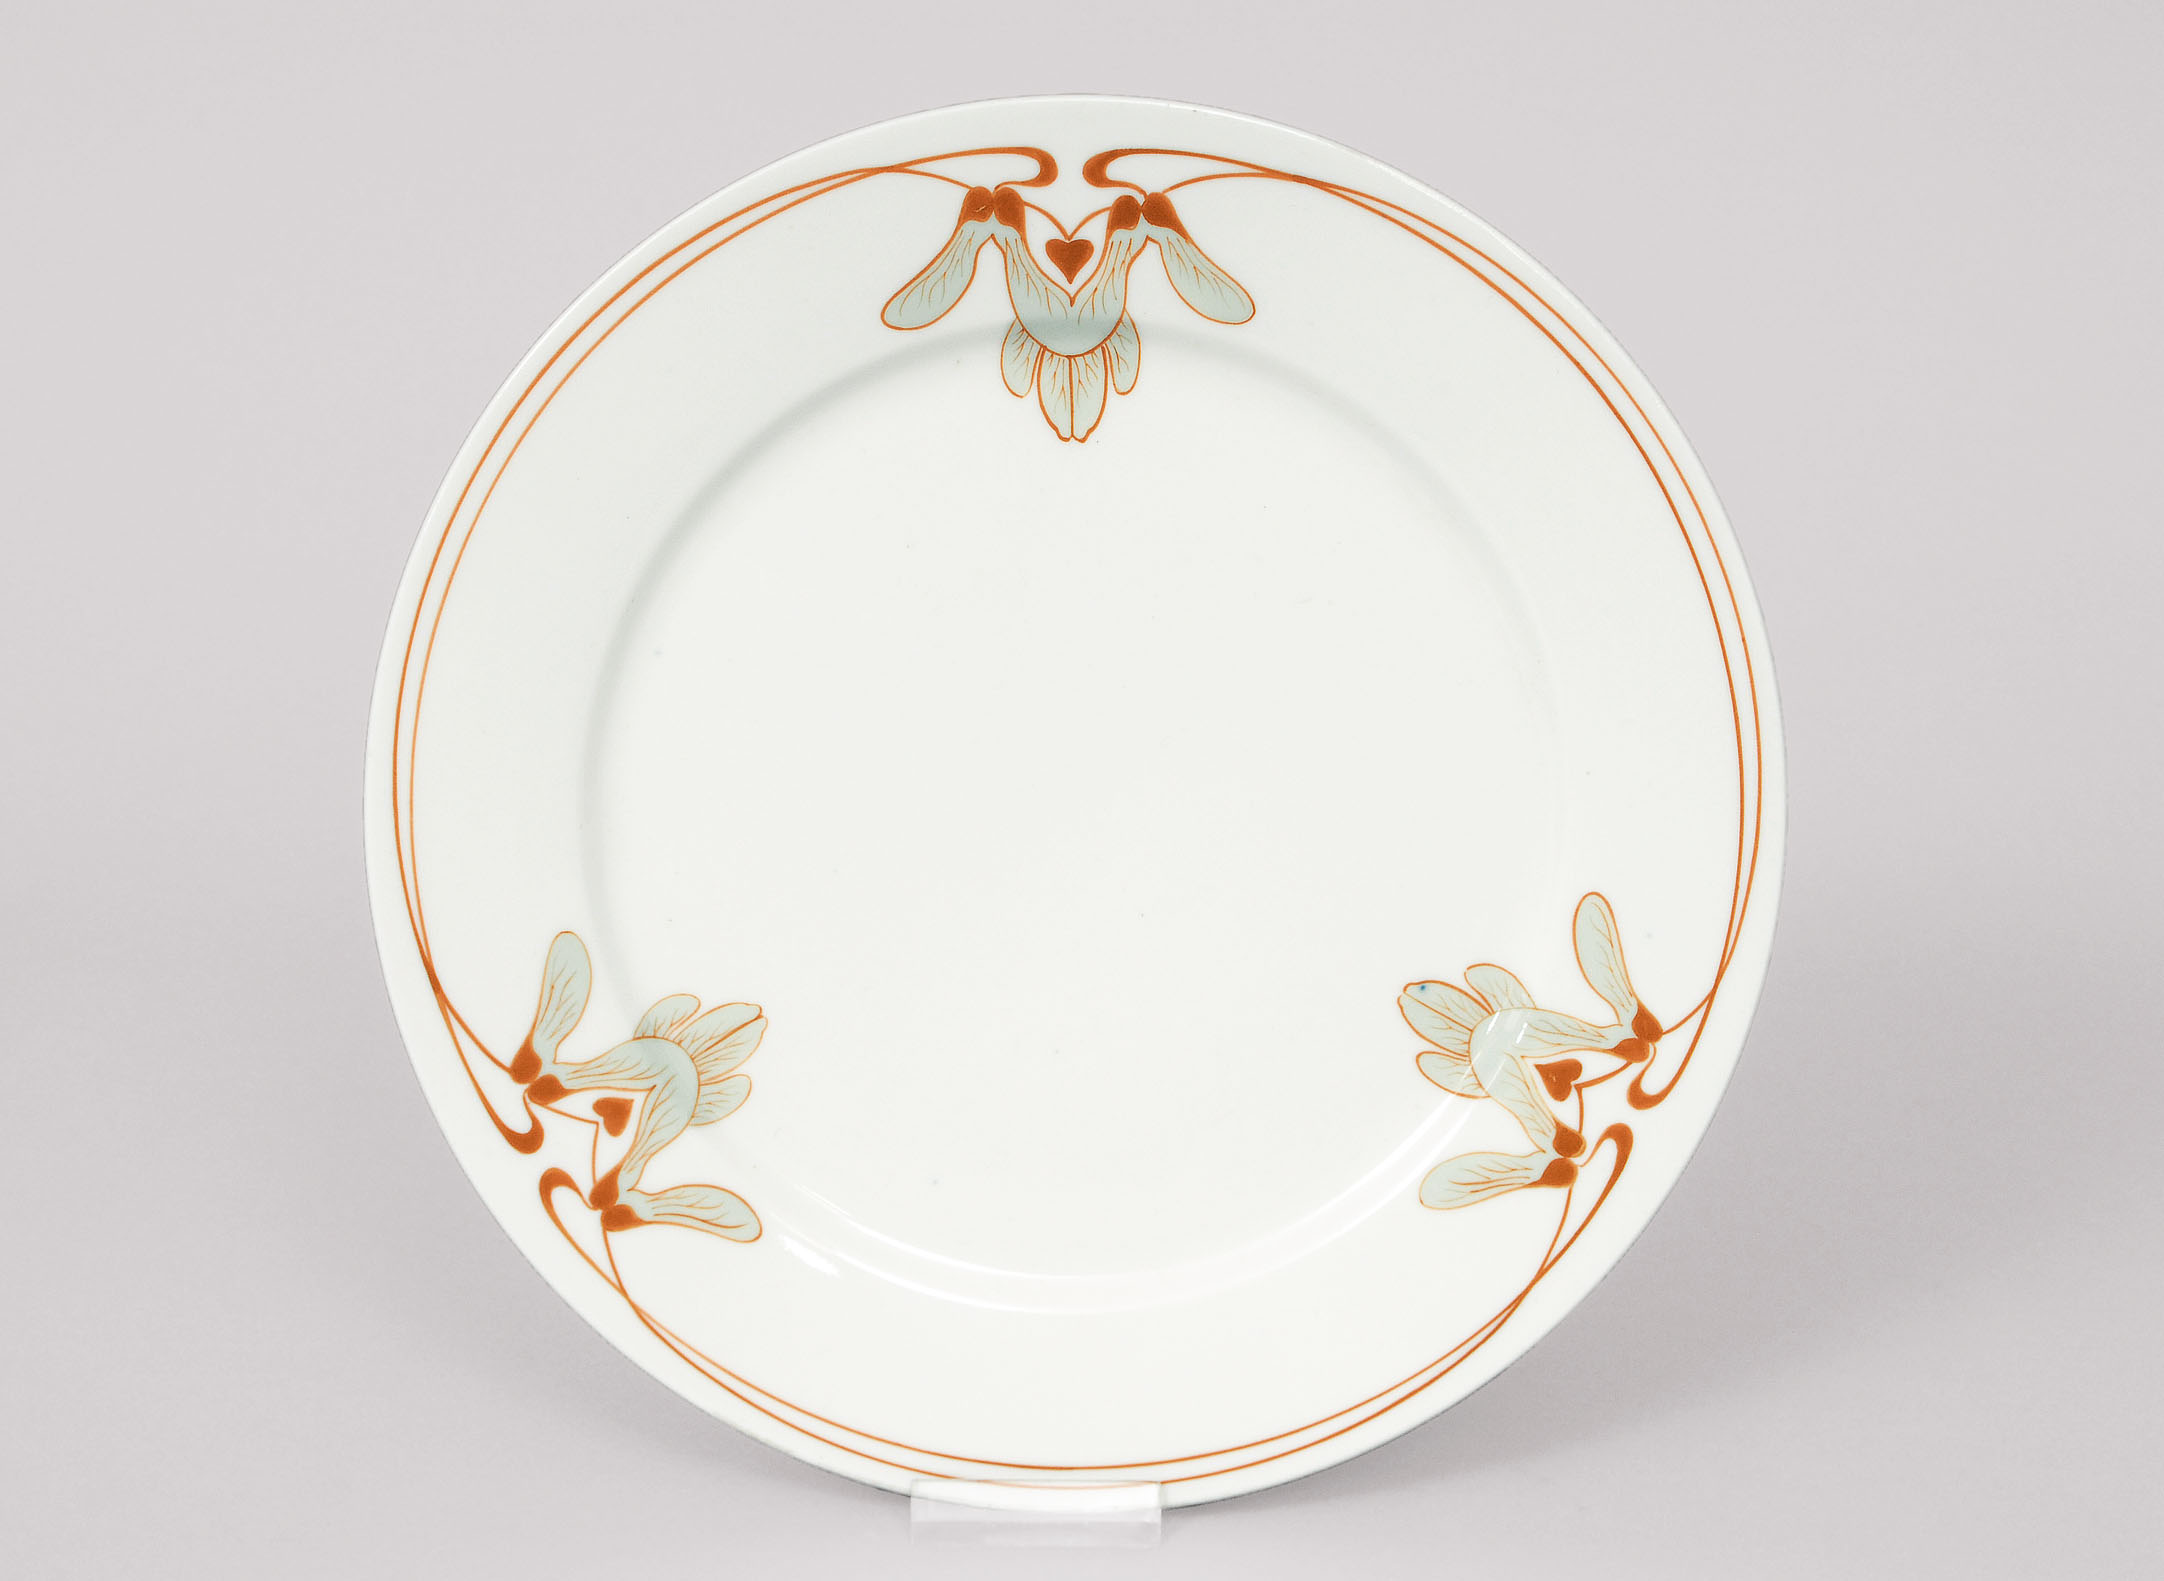 An Art-Nouvau plate with maple pattern